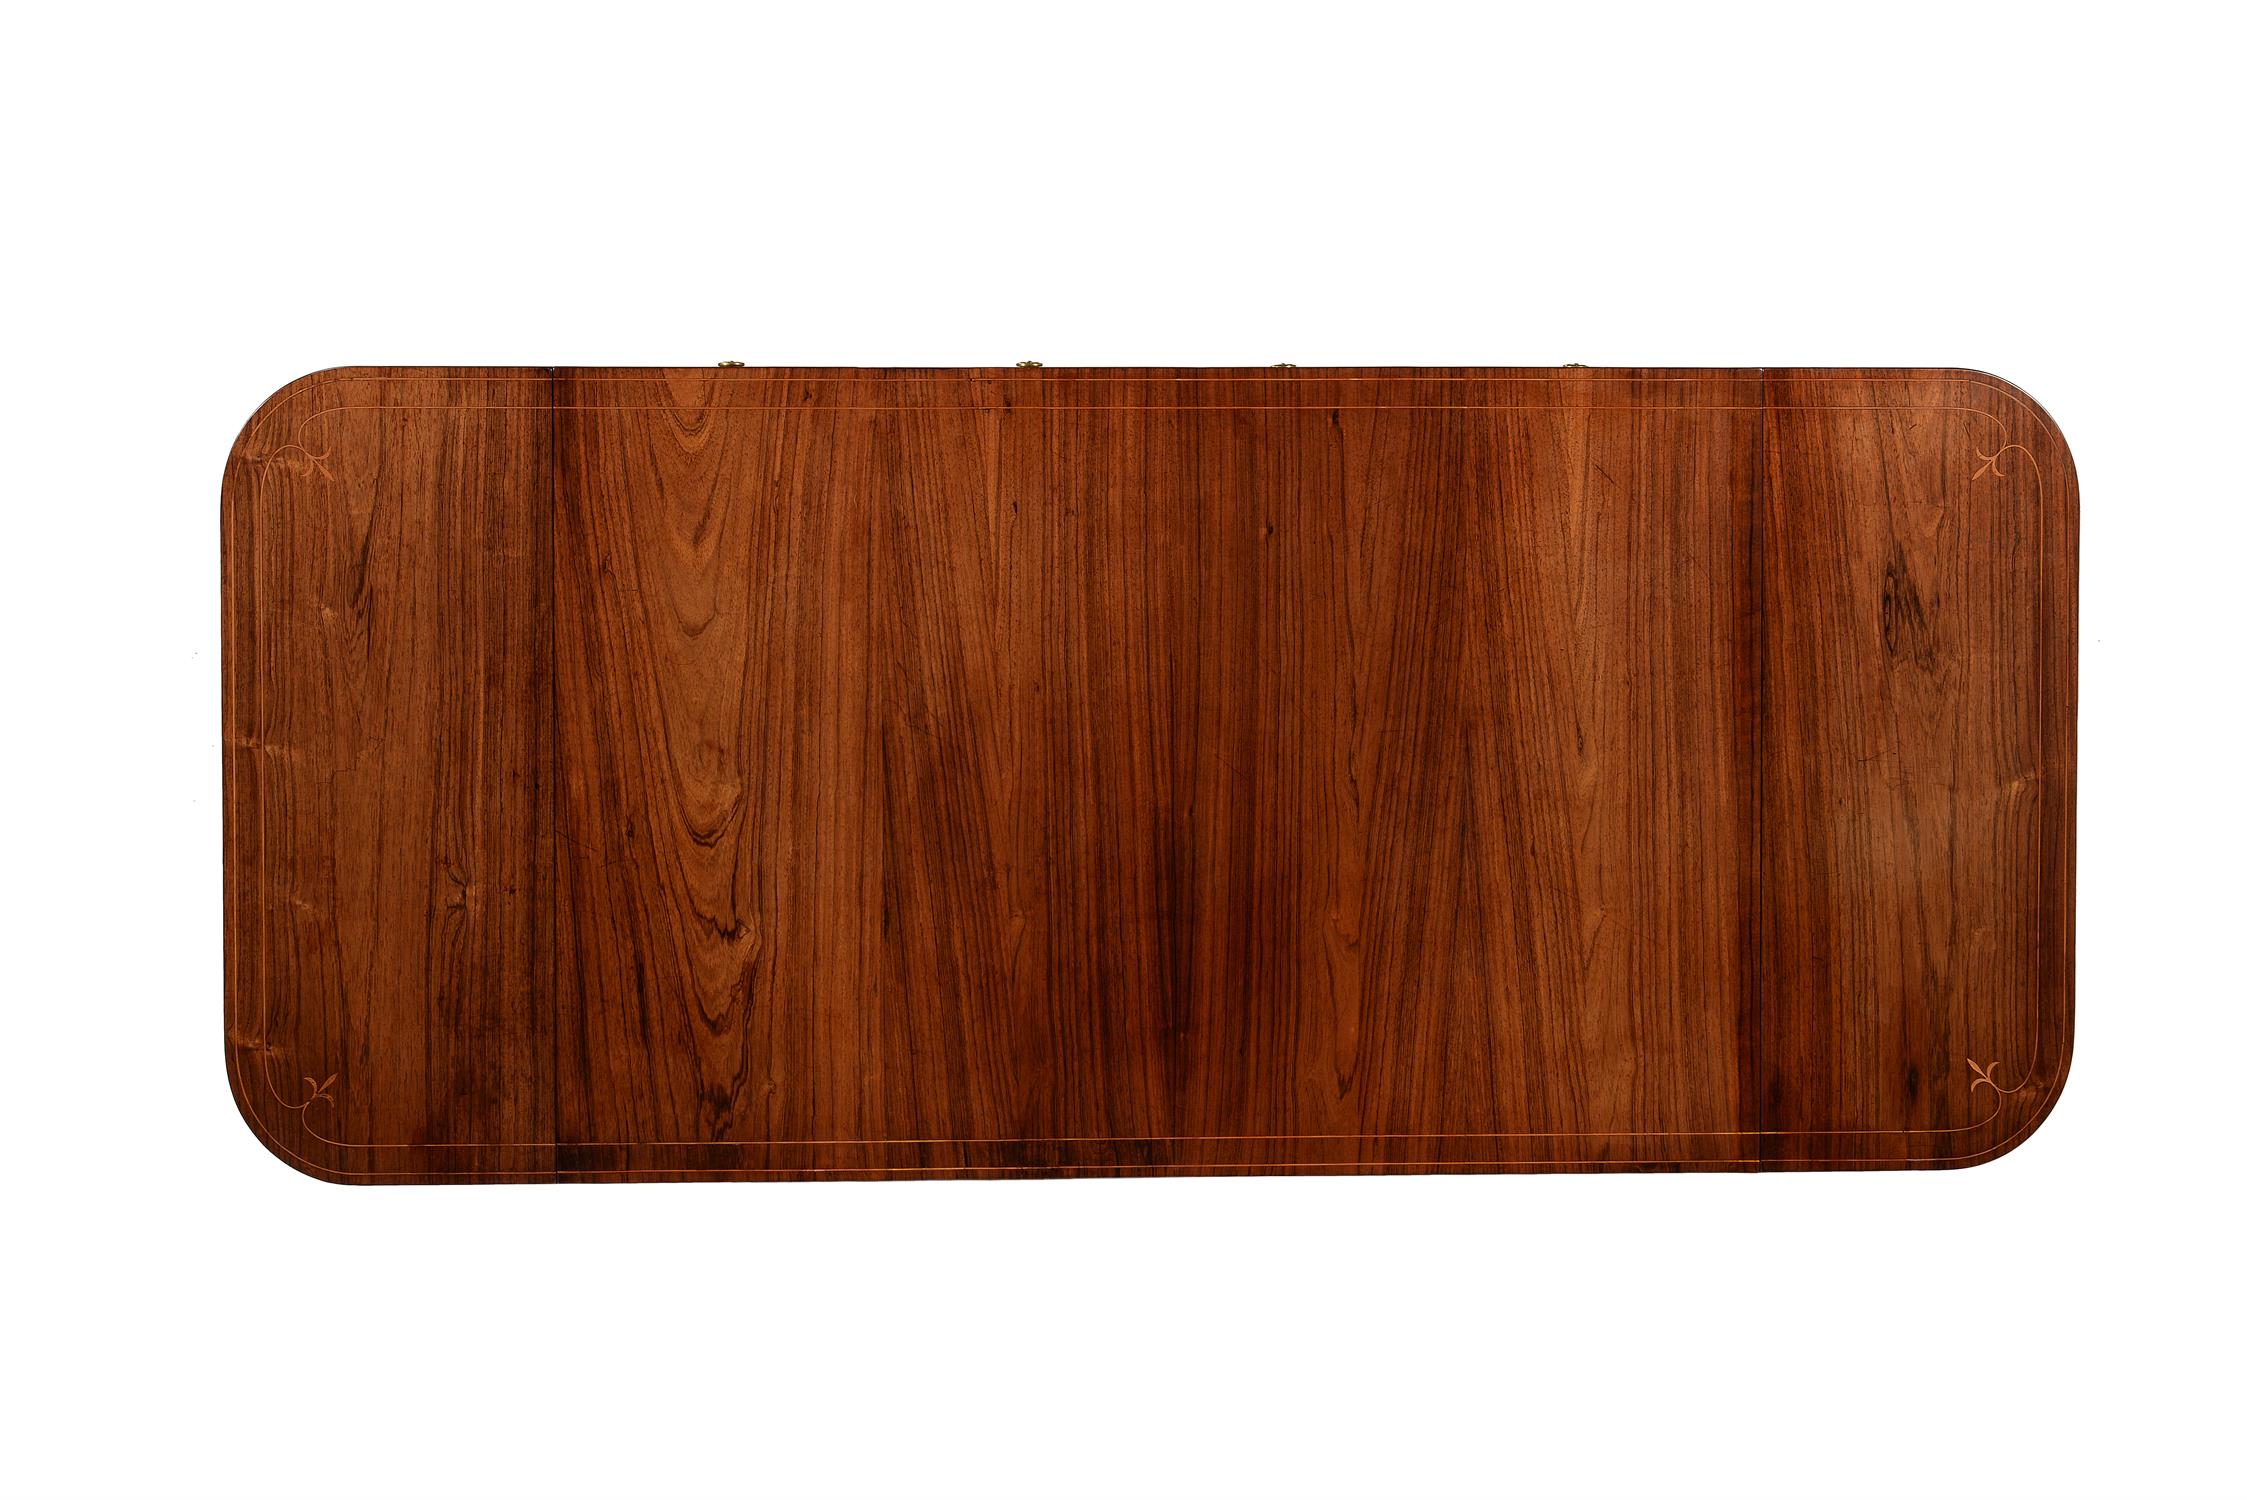 Y A Regency rosewood sofa table - Image 3 of 4